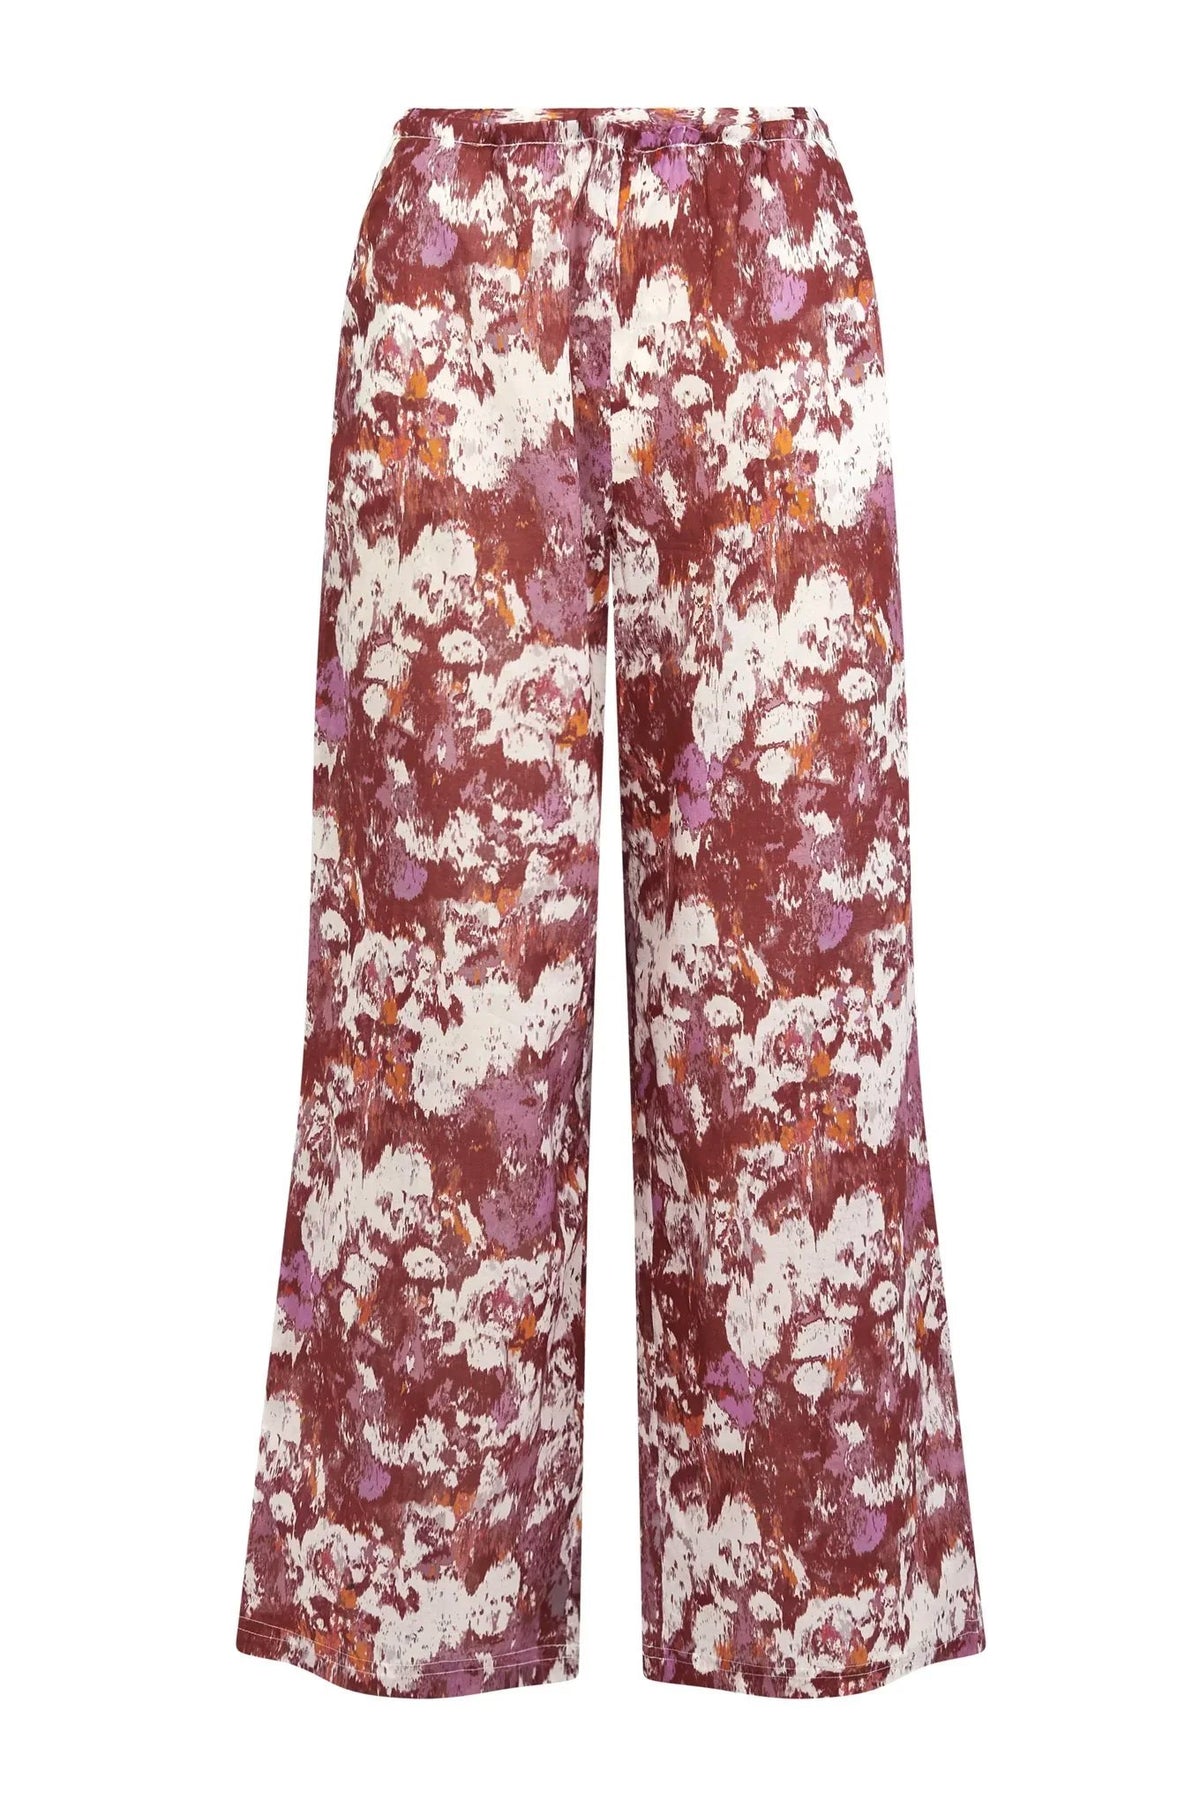 NARI PALAZZO Organic Cotton Trouser - Poppy Red - Komodo Fashion